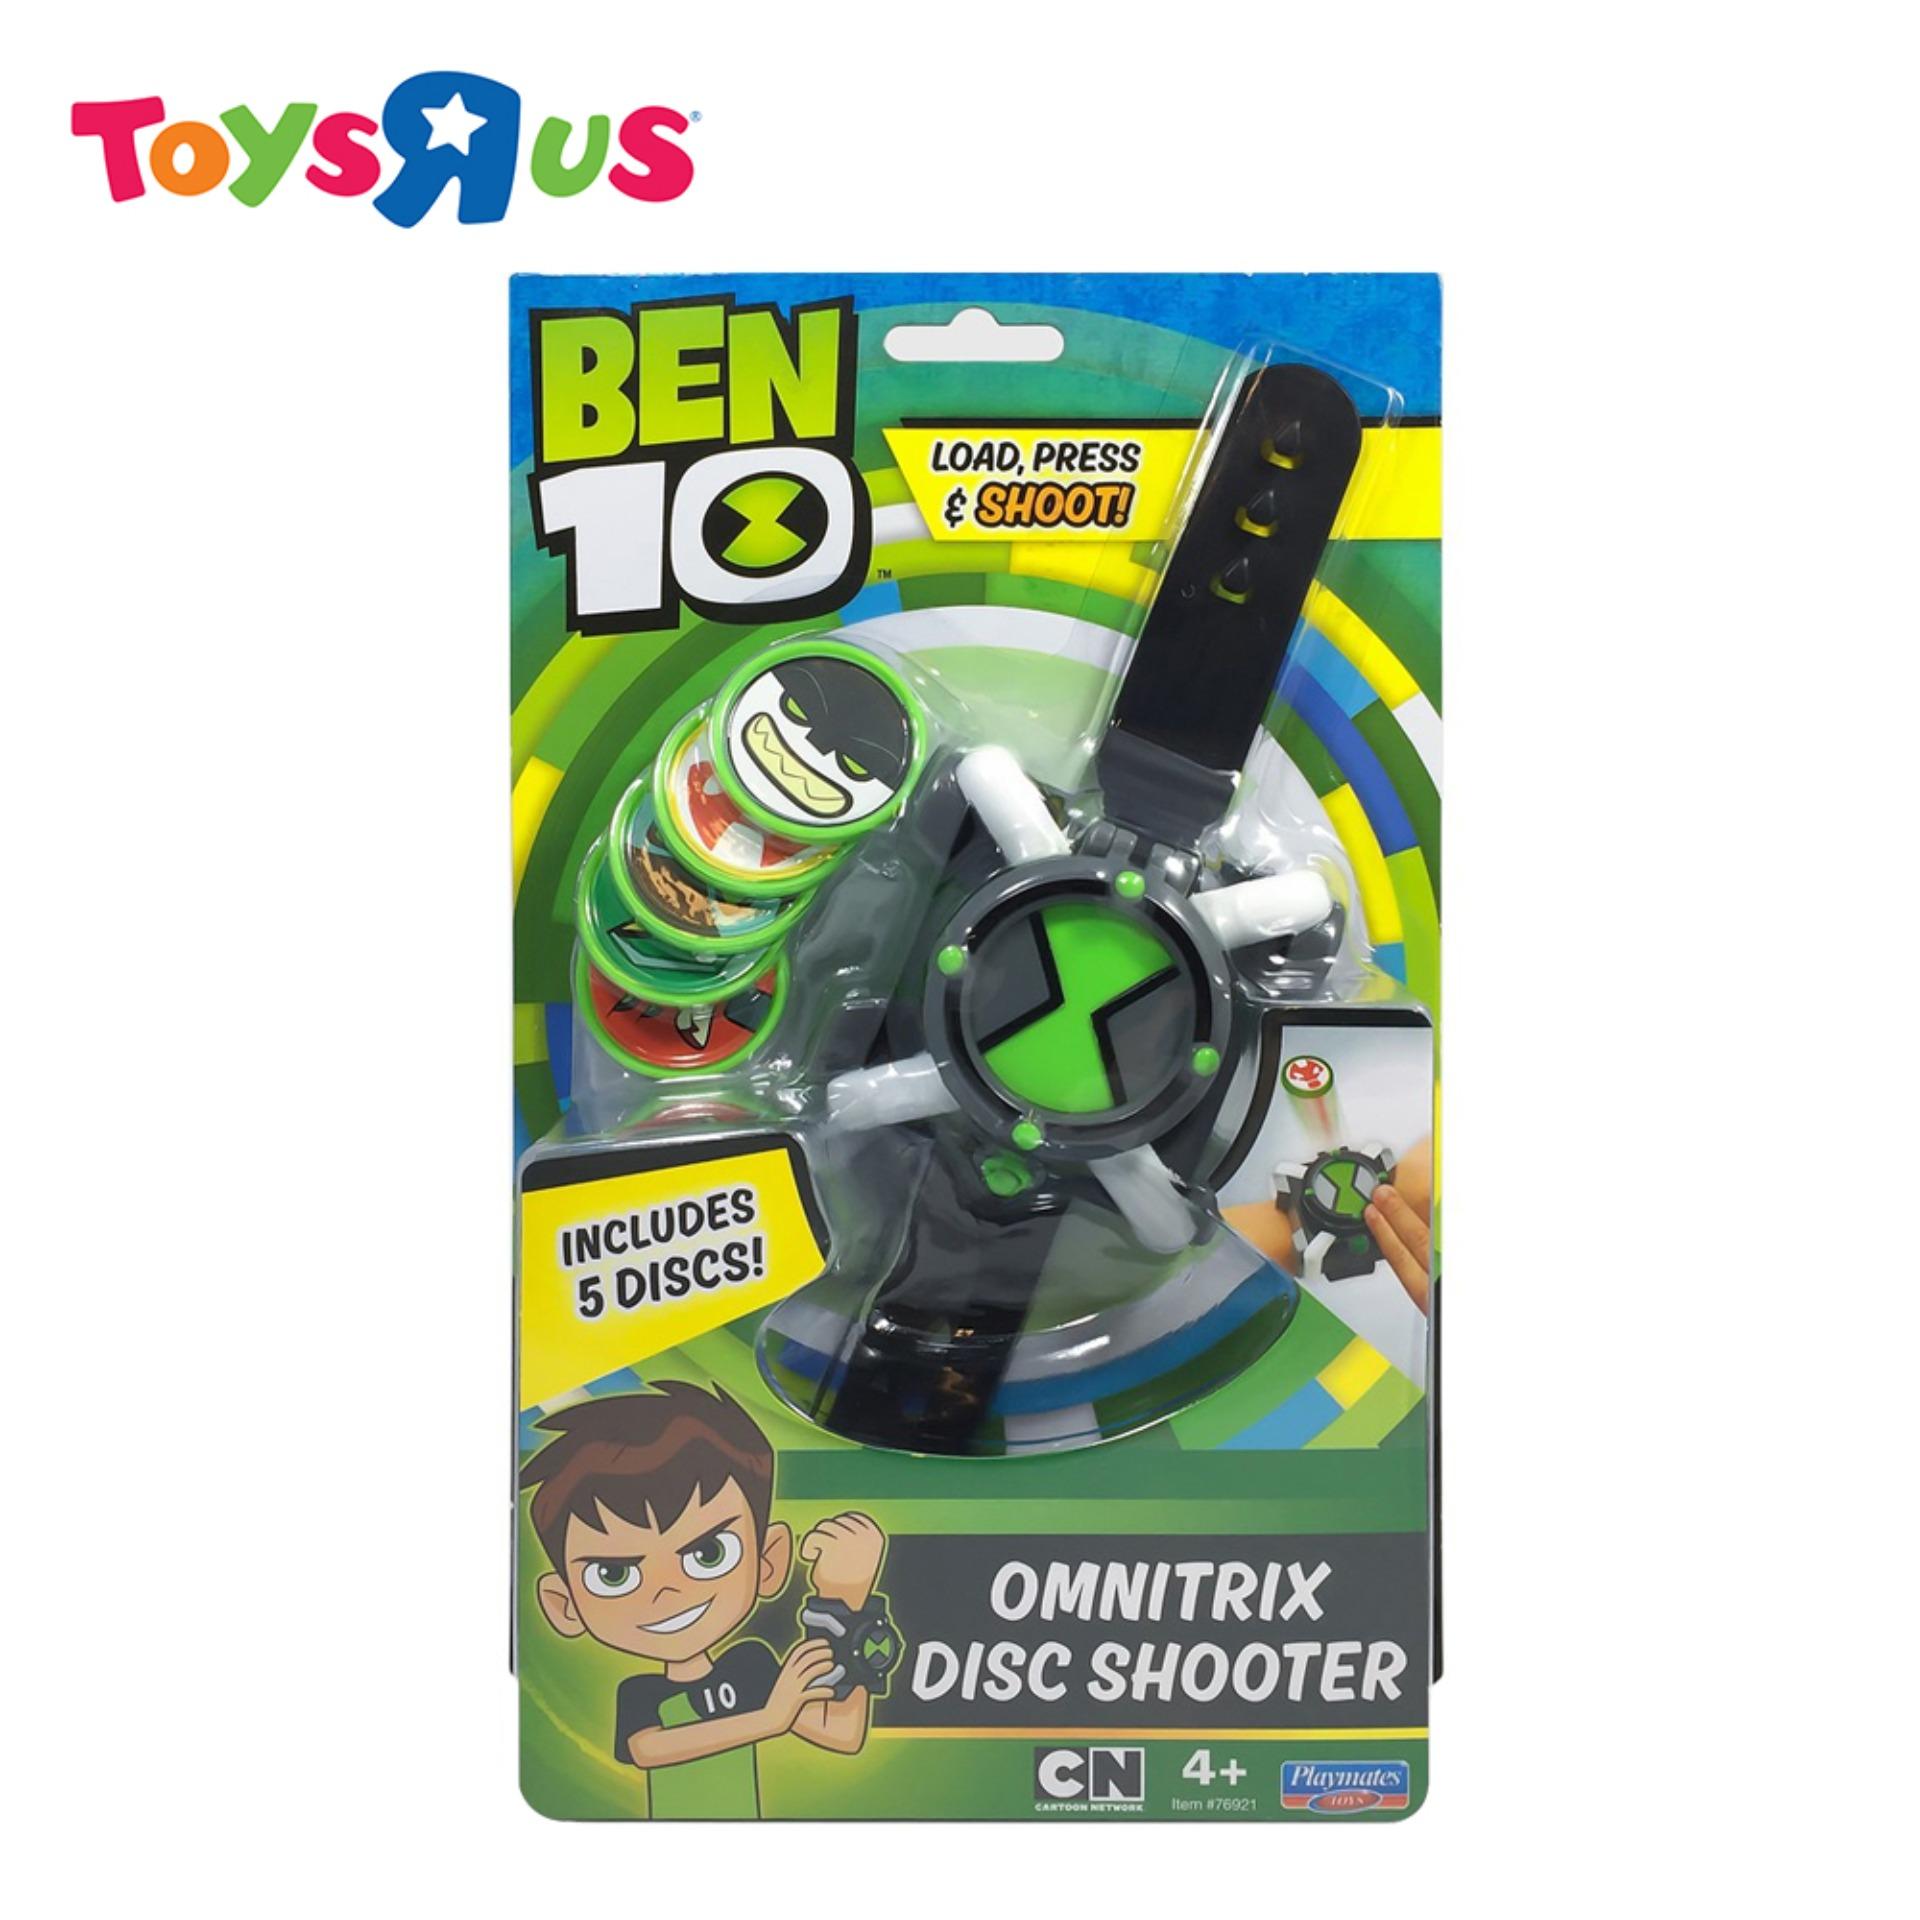 Ben 10 omnitrix toys r us - zoomstand